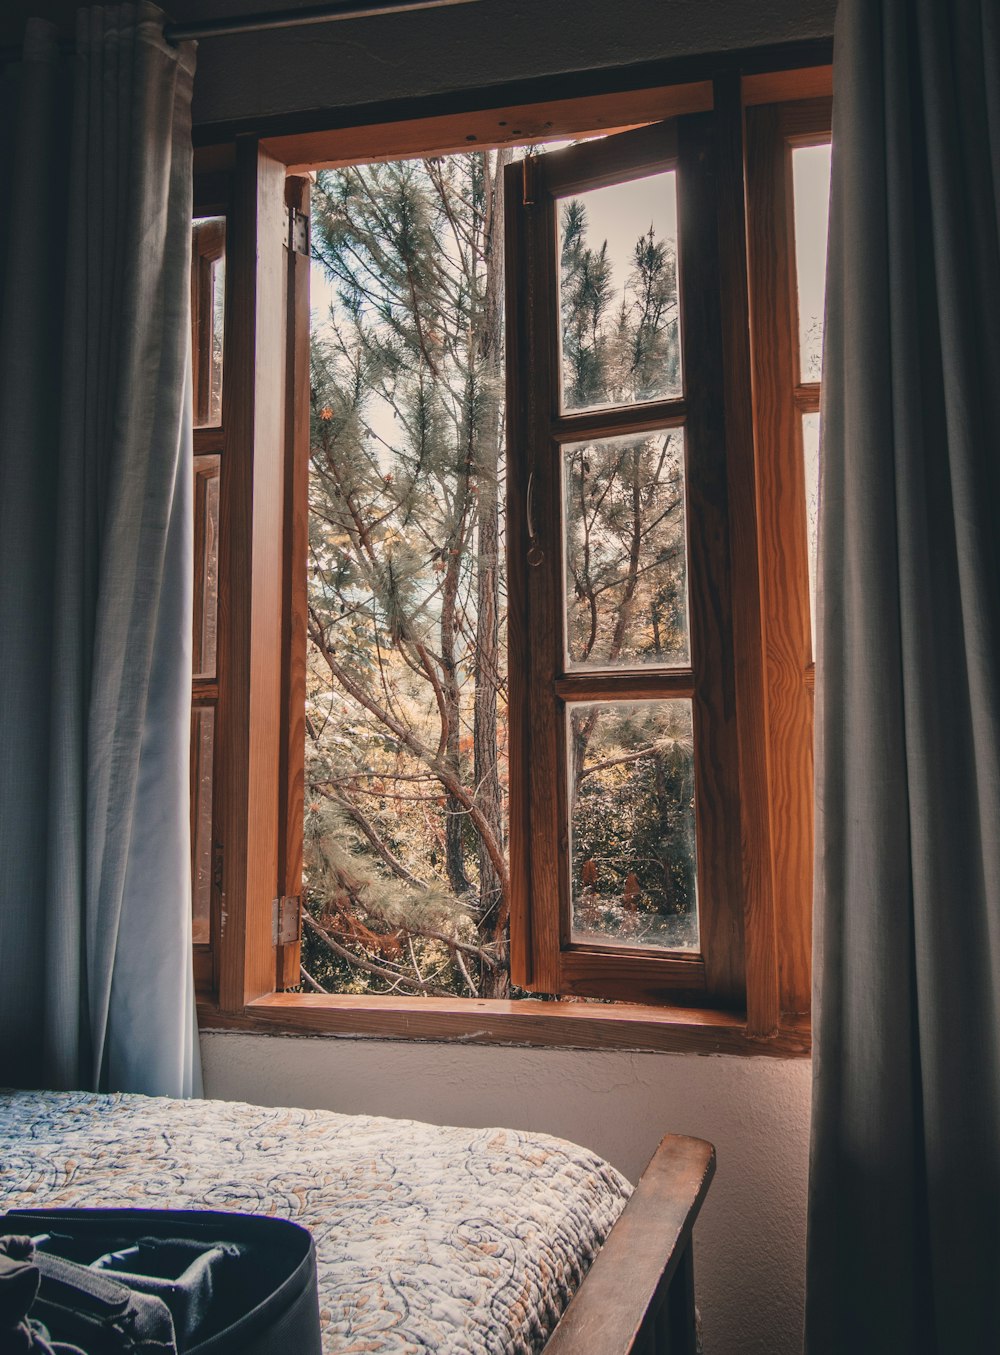 white window curtain near white wooden framed glass window